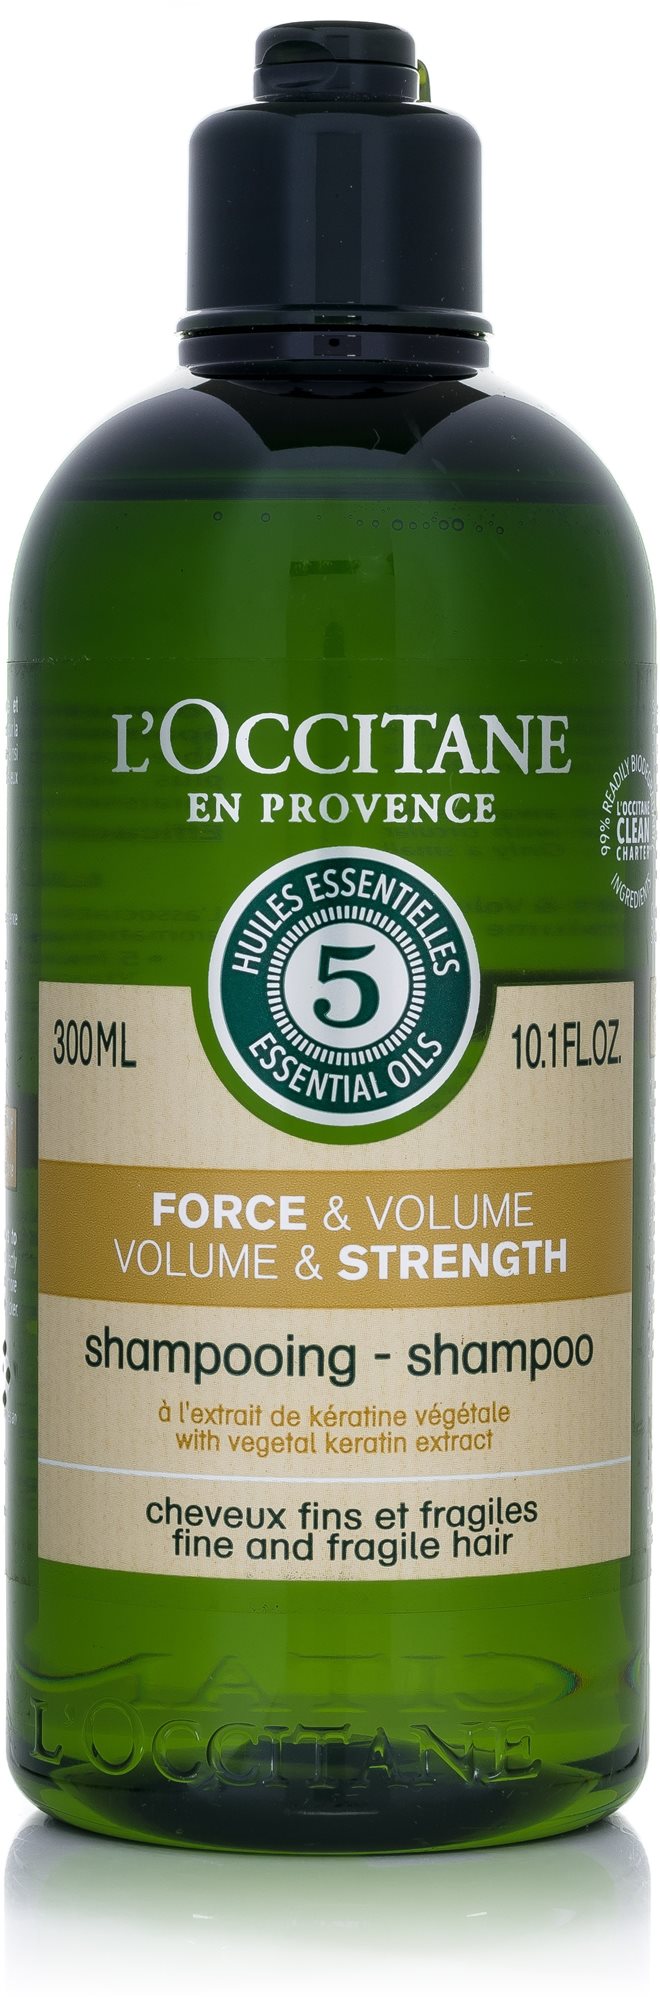 L'OCCITANE Essential Oils Volume & Strenght Shampoo 300 ml